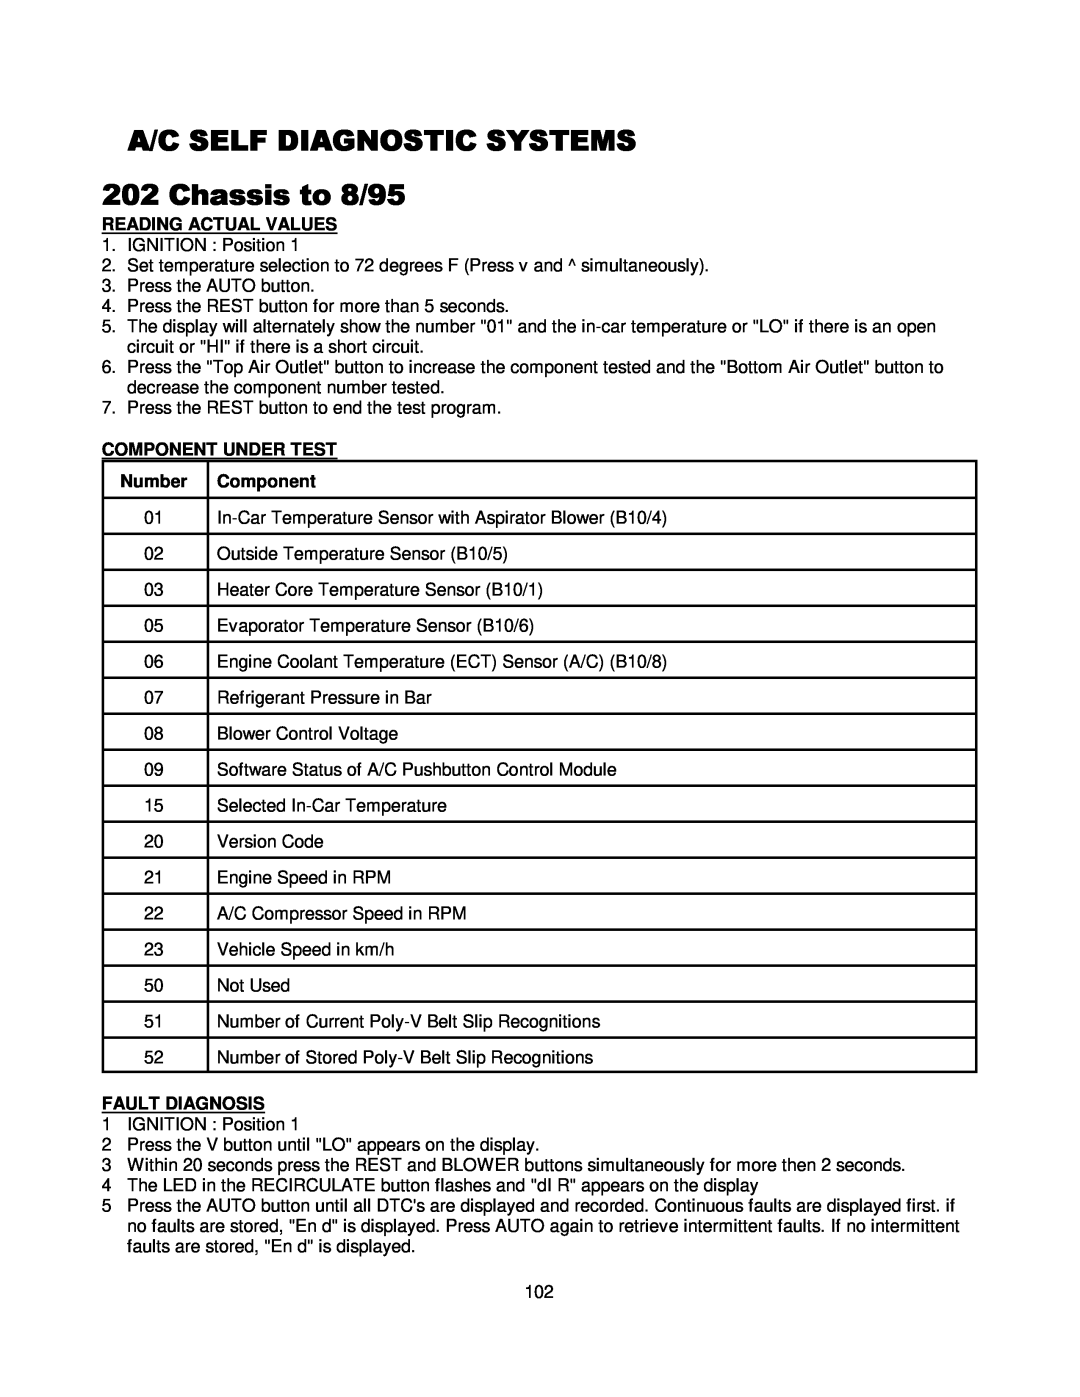 Mercedes-Benz CS1000 manual 44+!2879, Reading Actual Values, Component Under Test, Number, Fault Diagnosis 